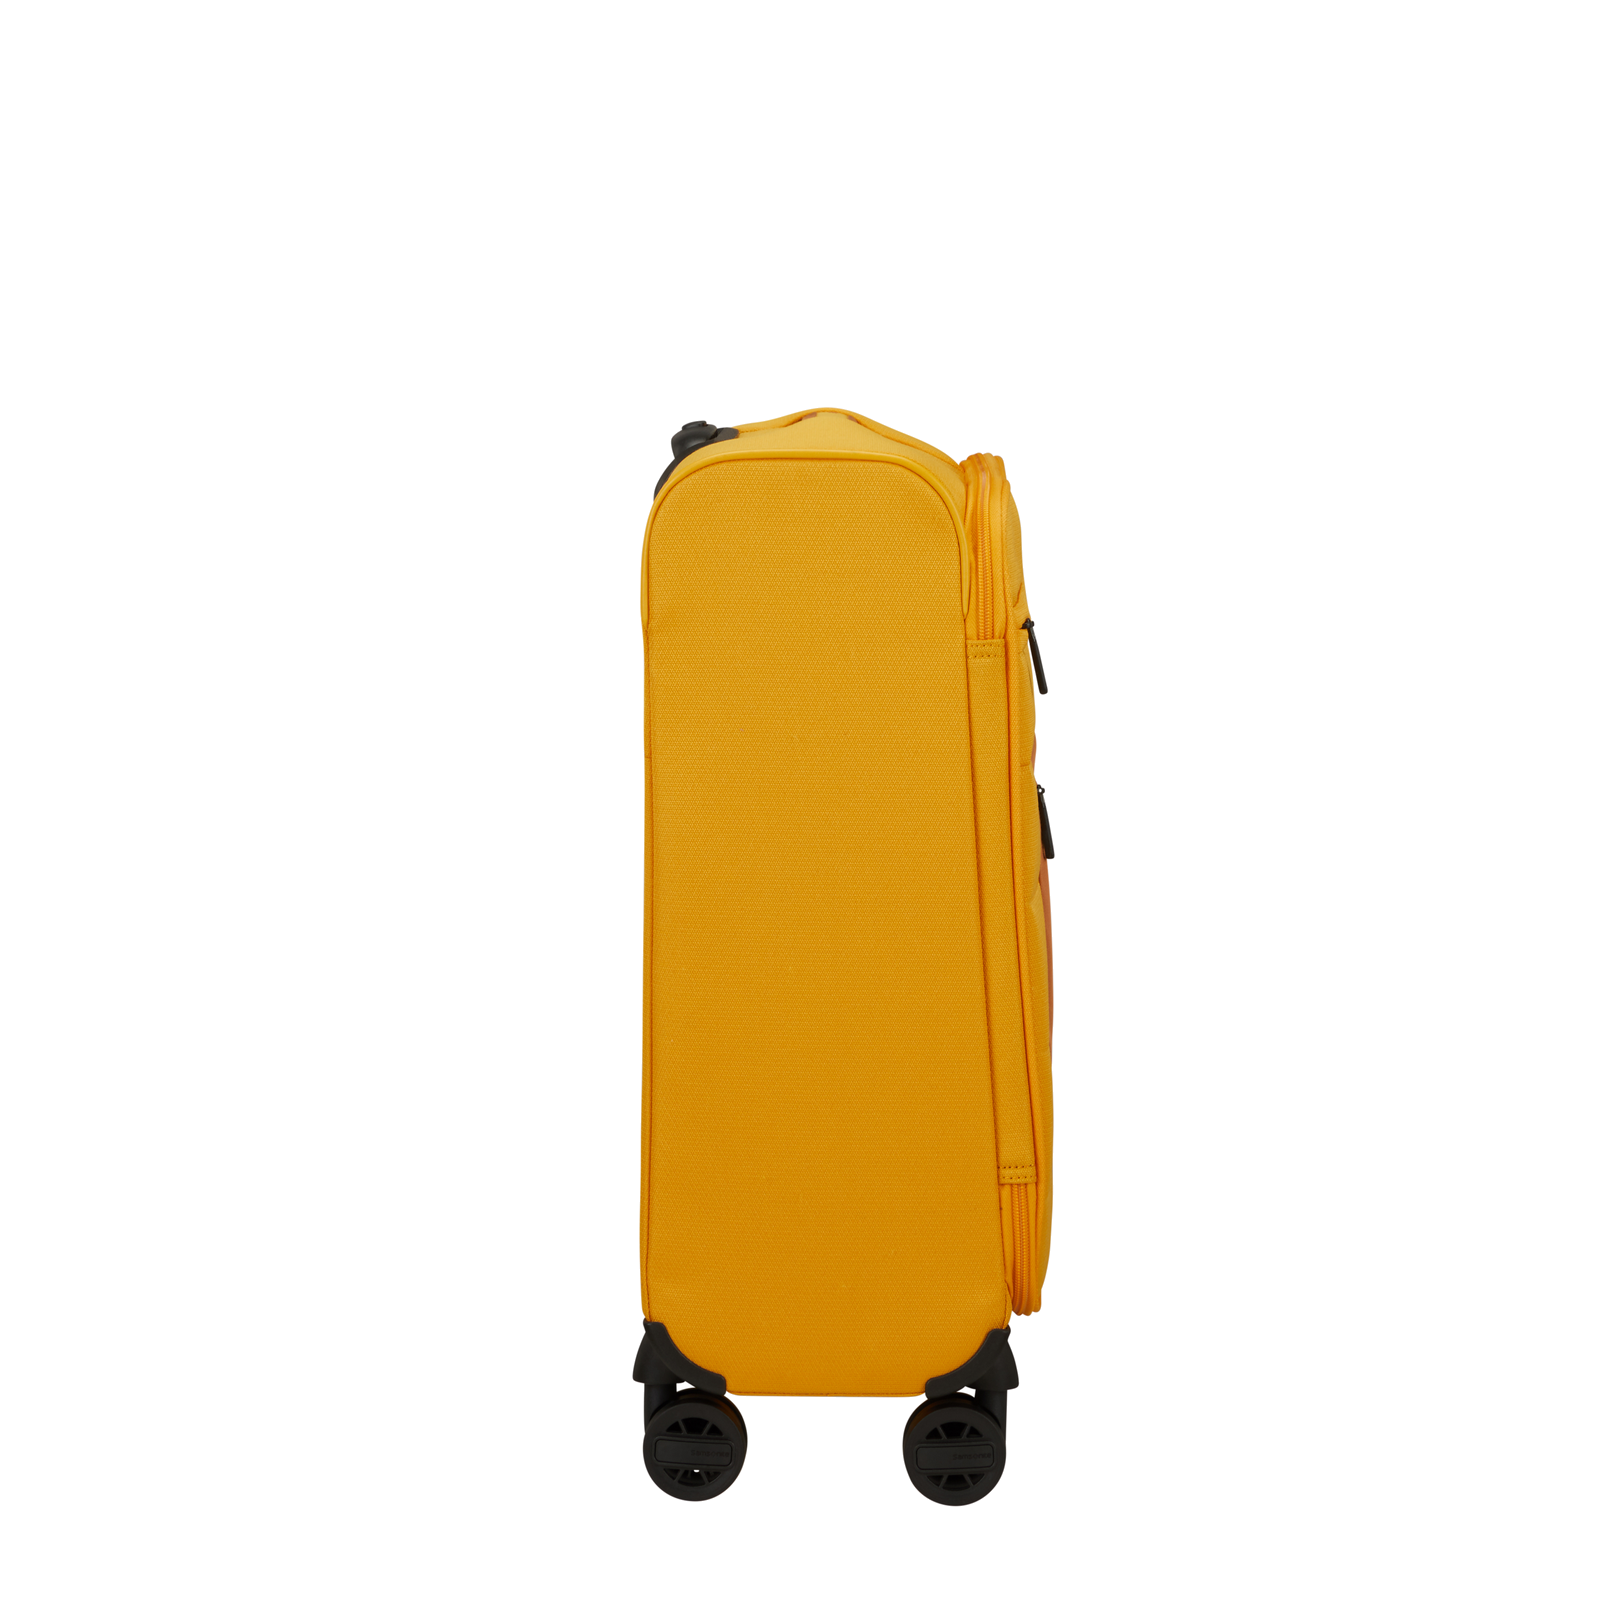 
Samsonite Vaycay 55cm Cabin Suitcase Golden Yellow